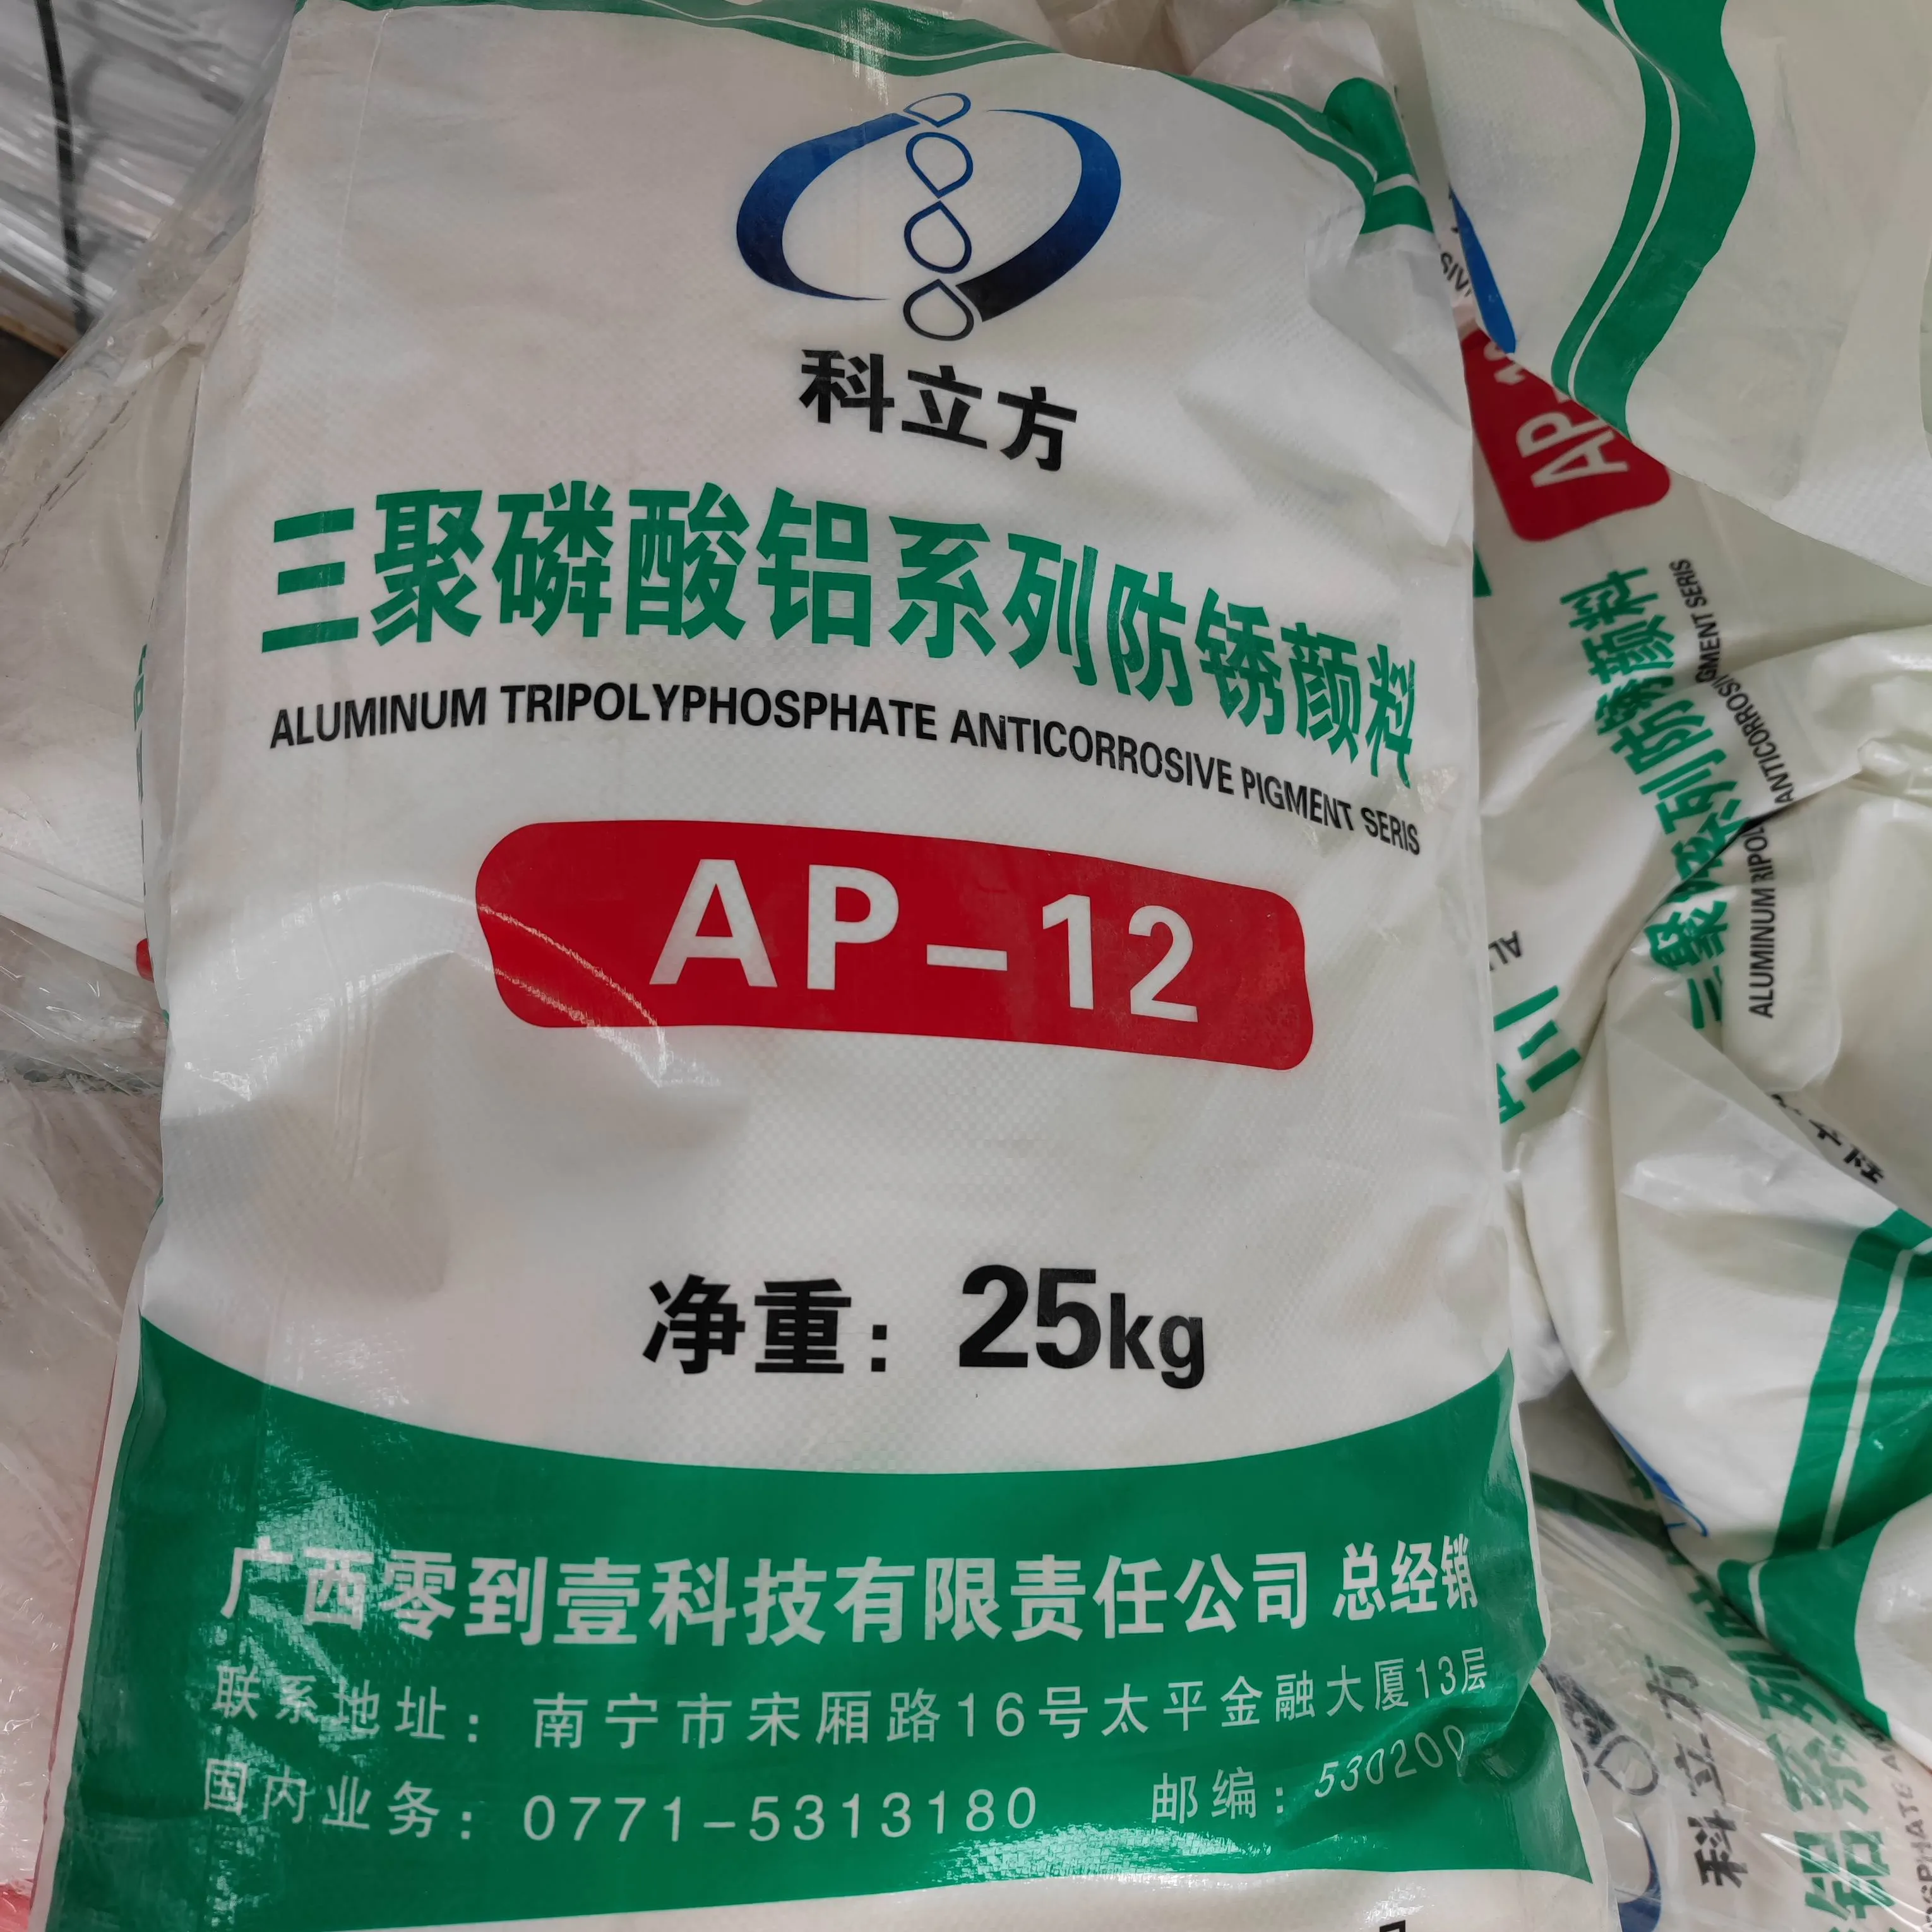 AP-12aluminum tripolyphosphate anticorrosion pigment série